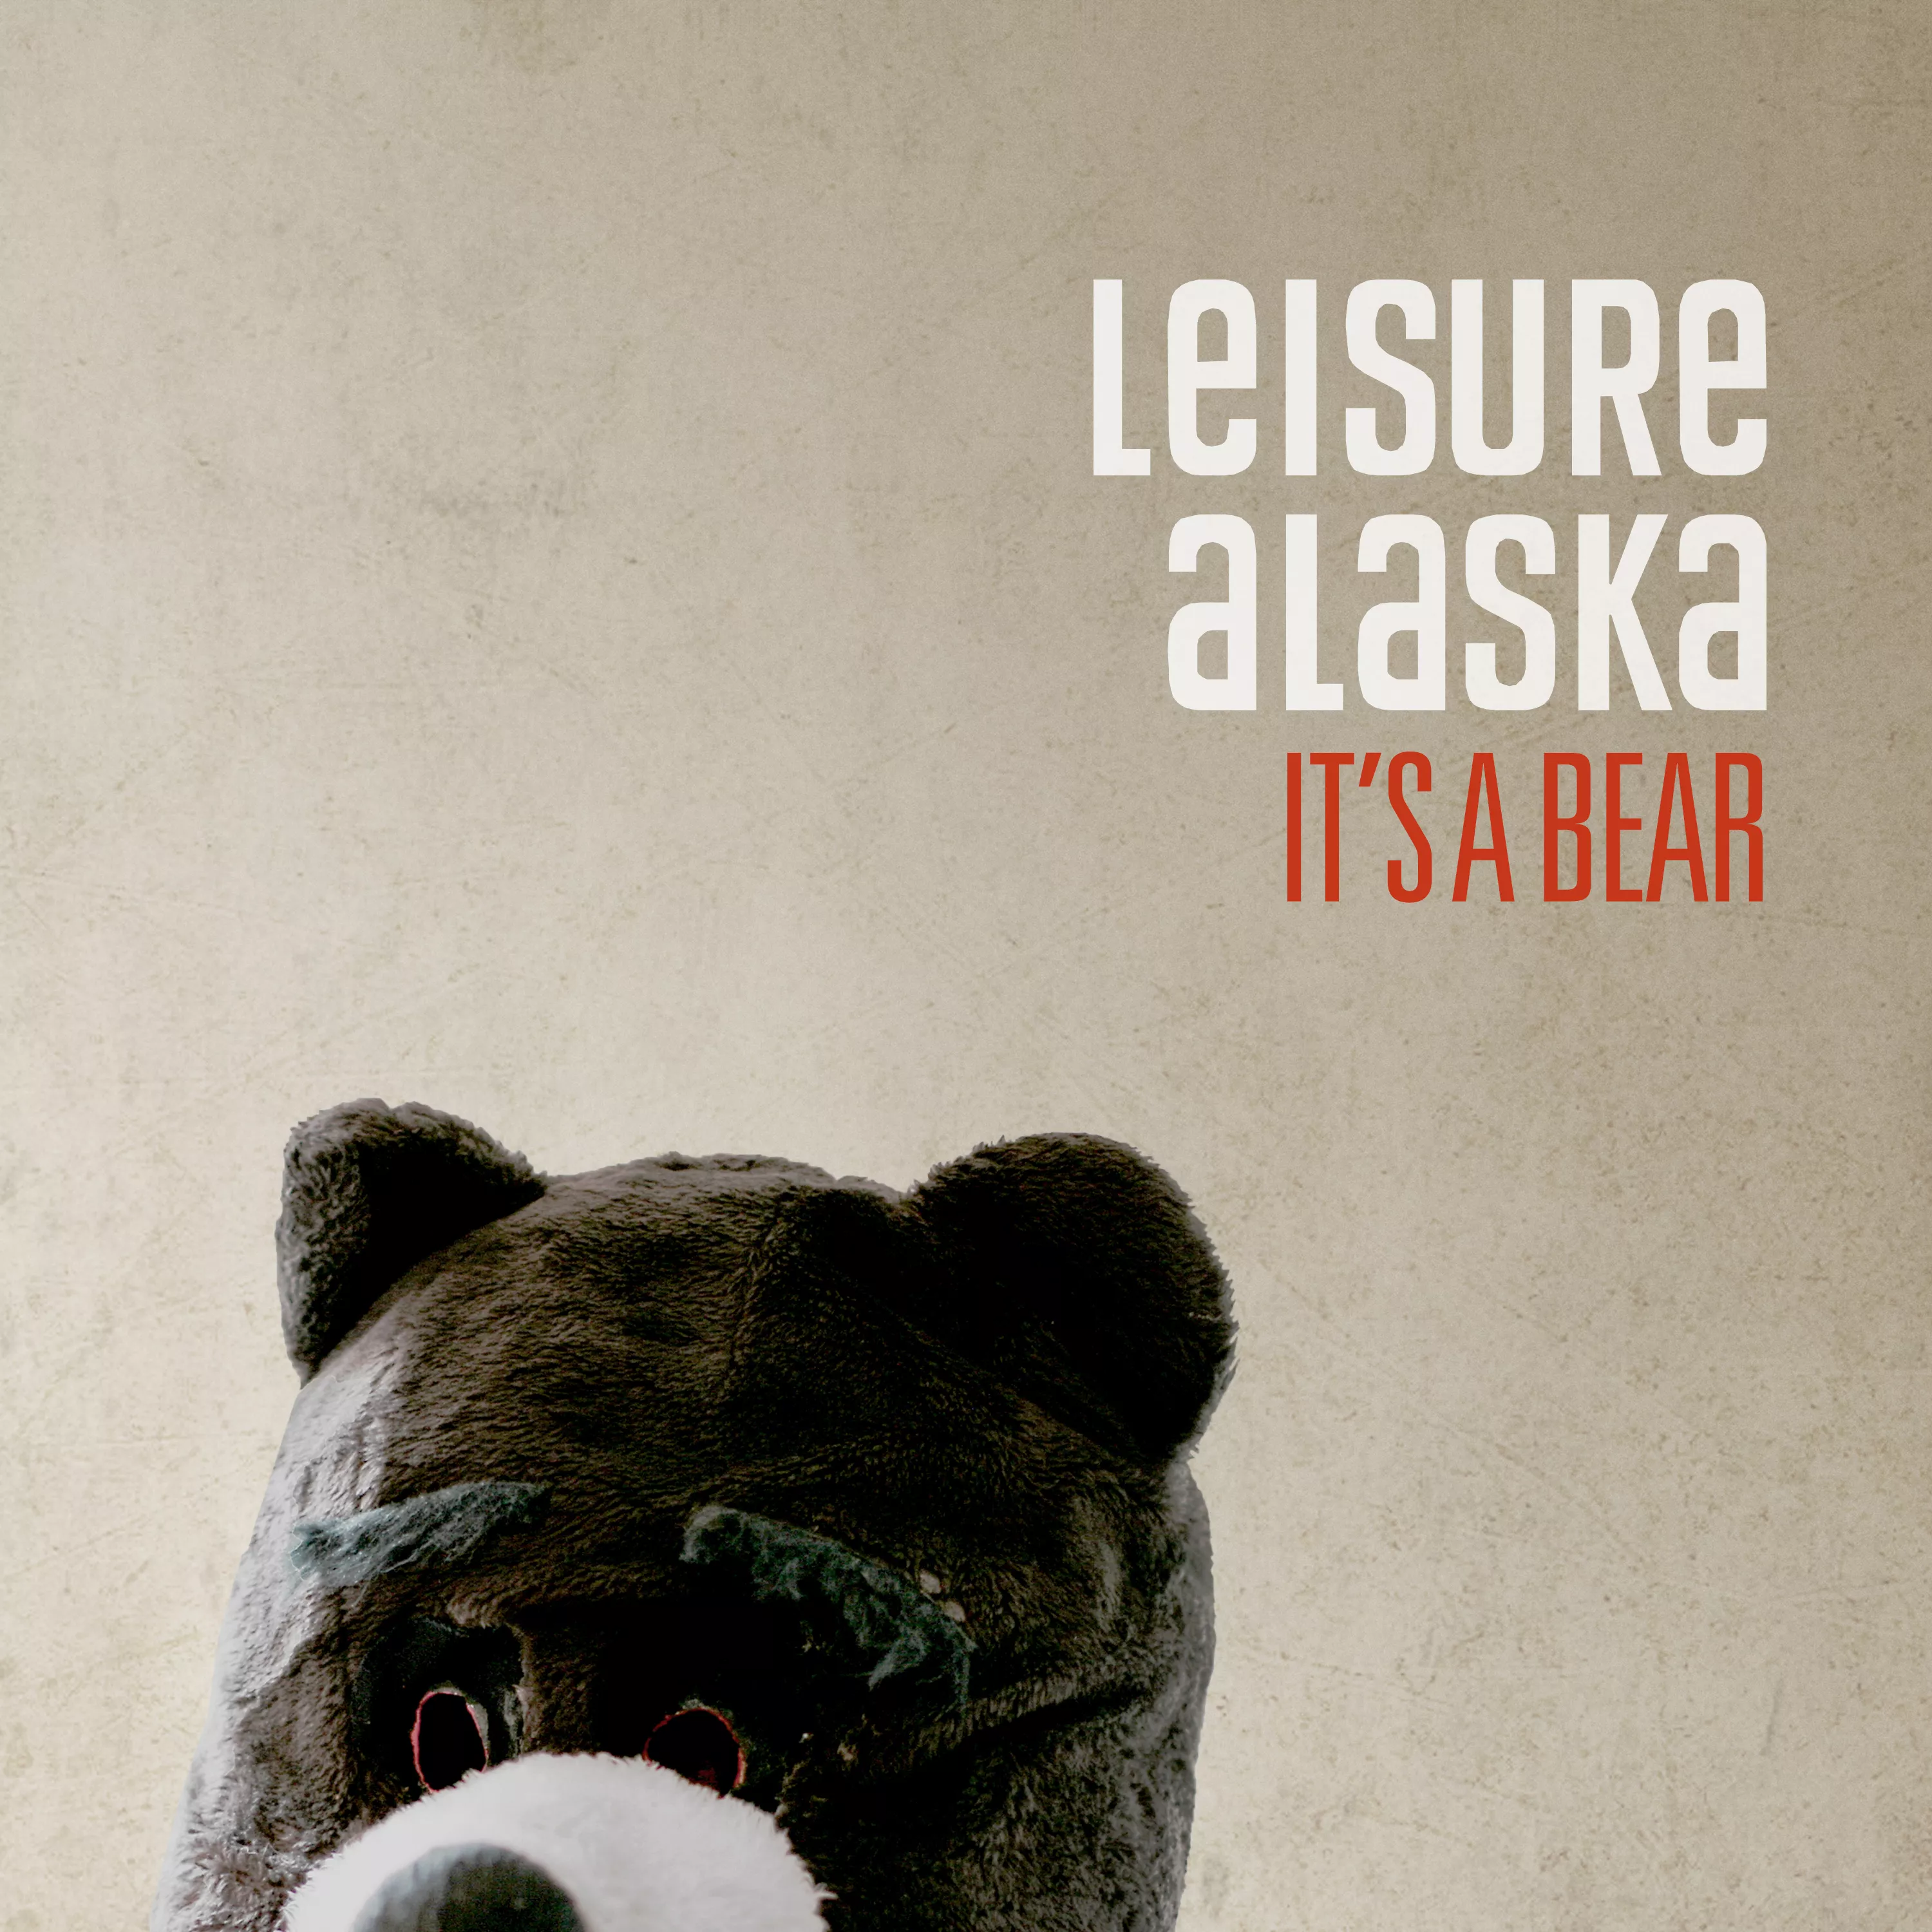 It's A Bear - Leisure Alaska